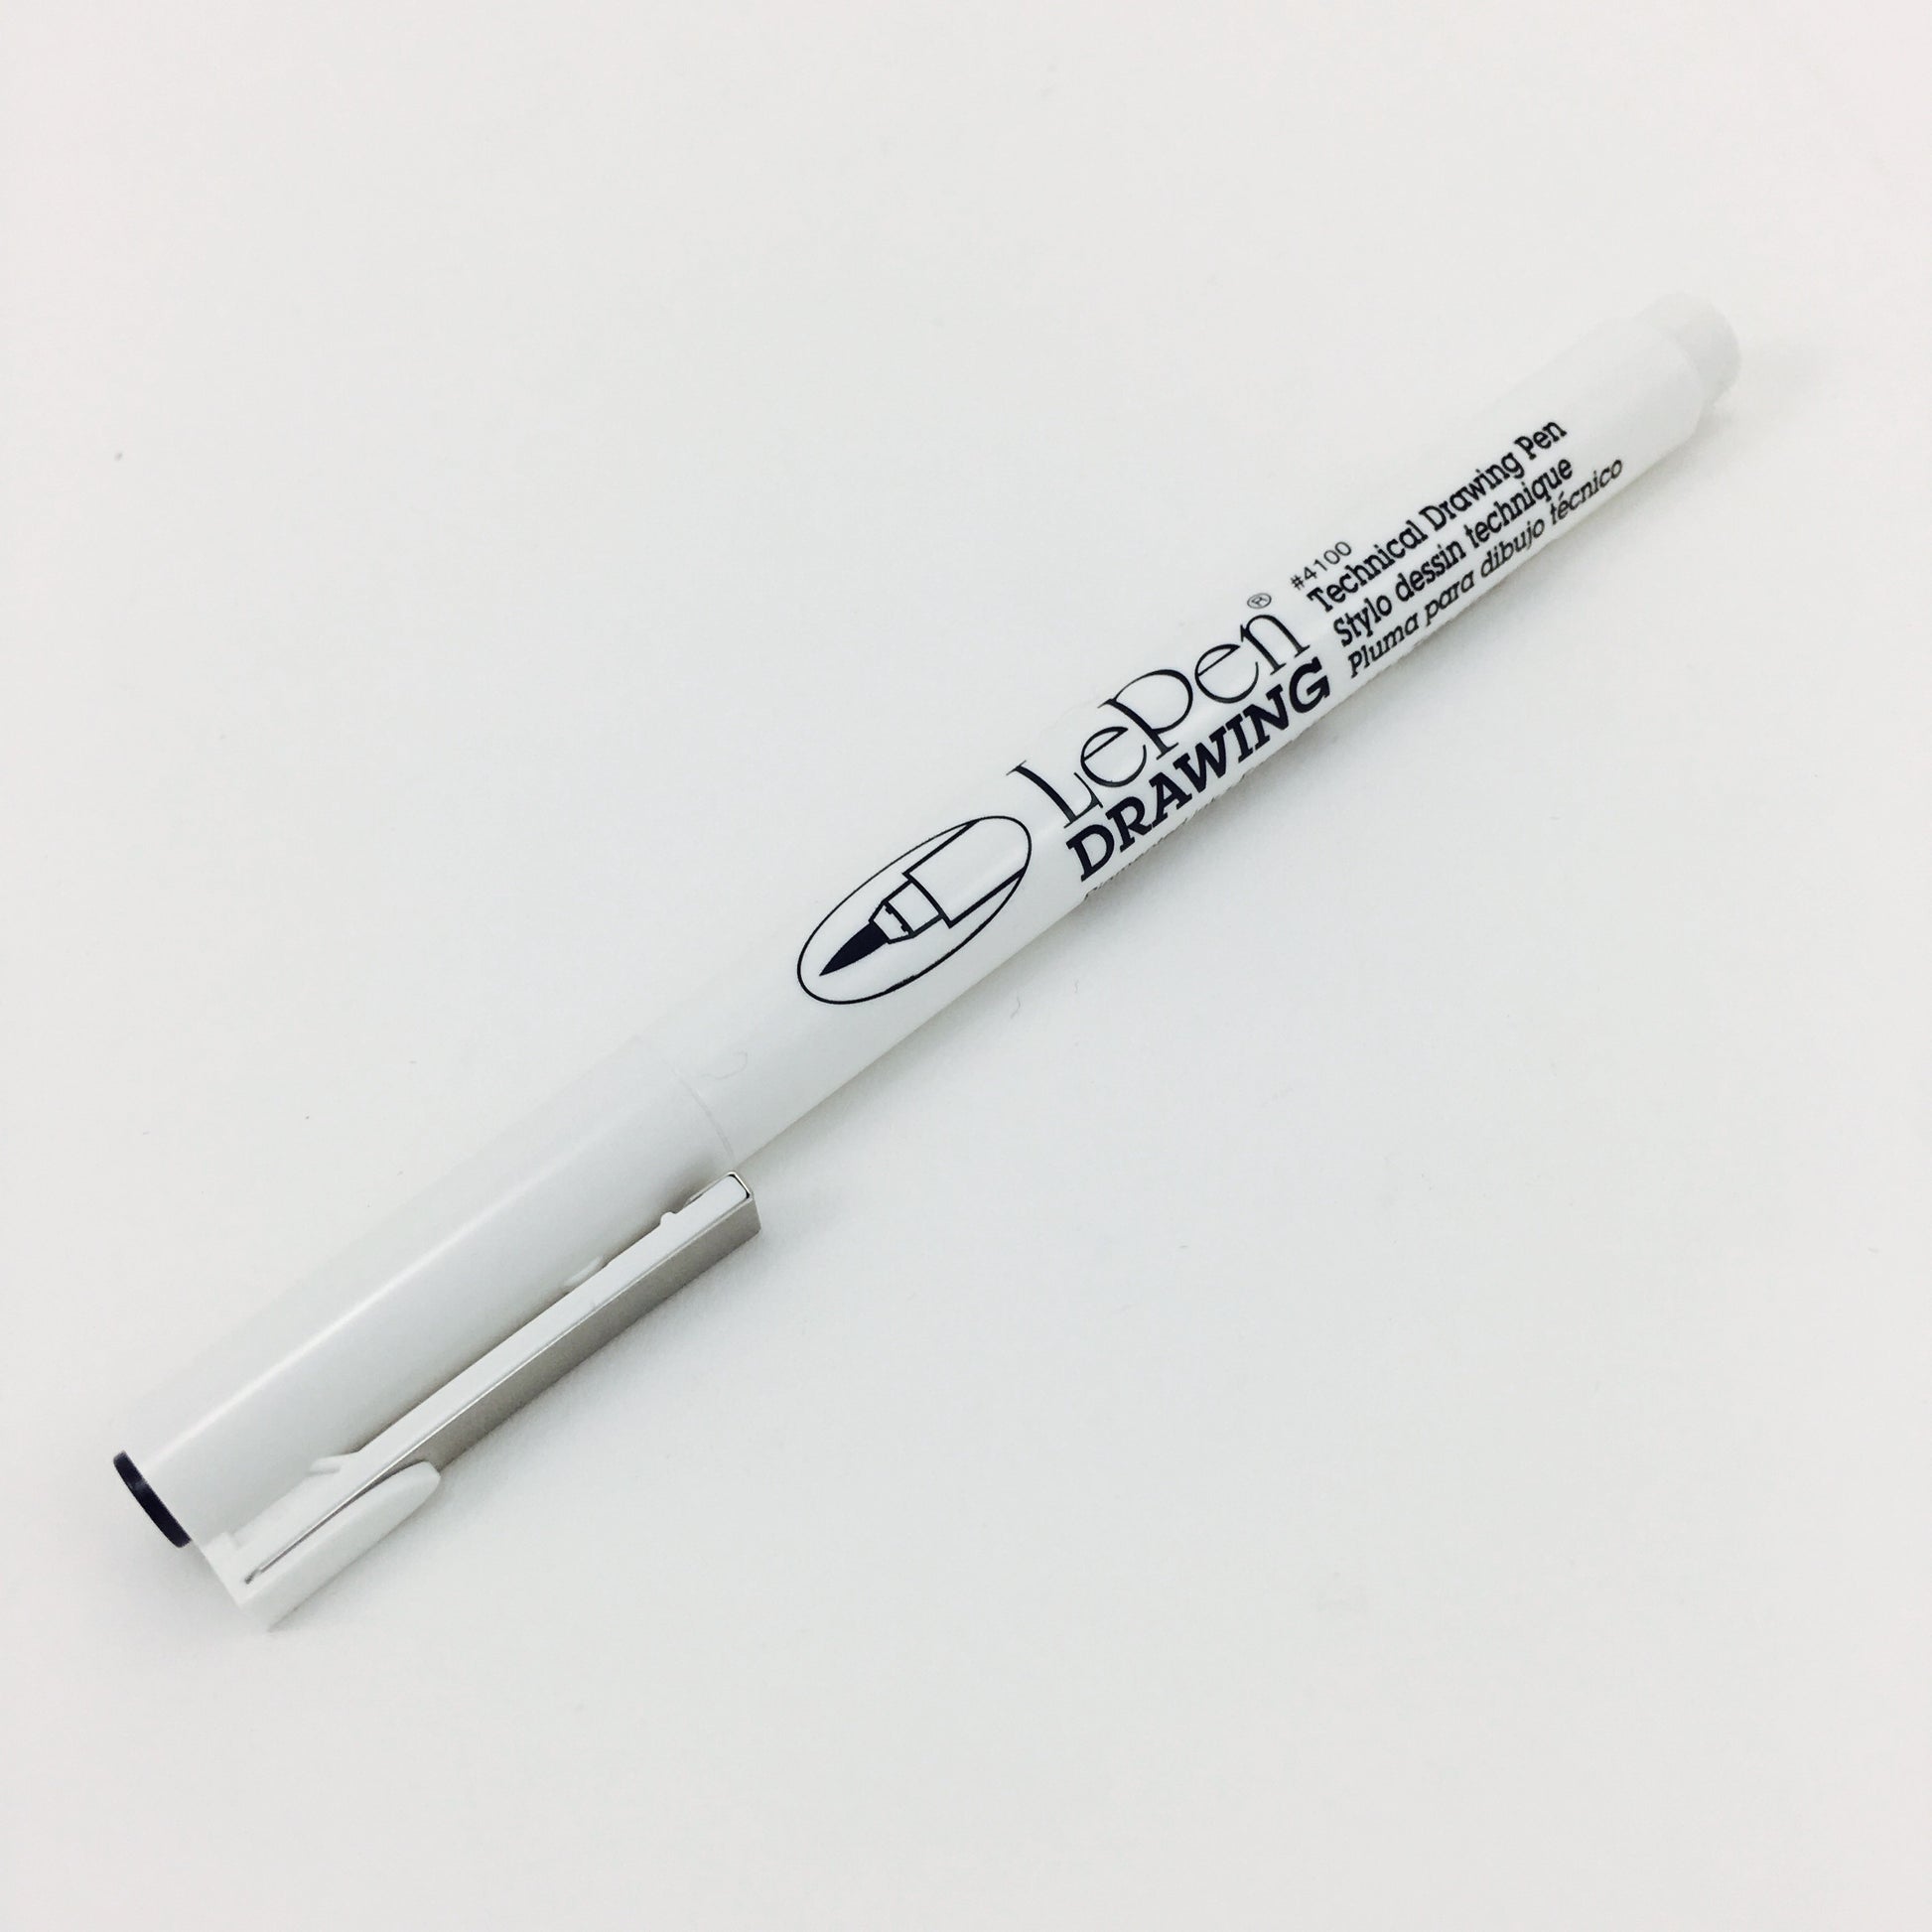 Le Pen Technical Drawing Brush Pen - Black